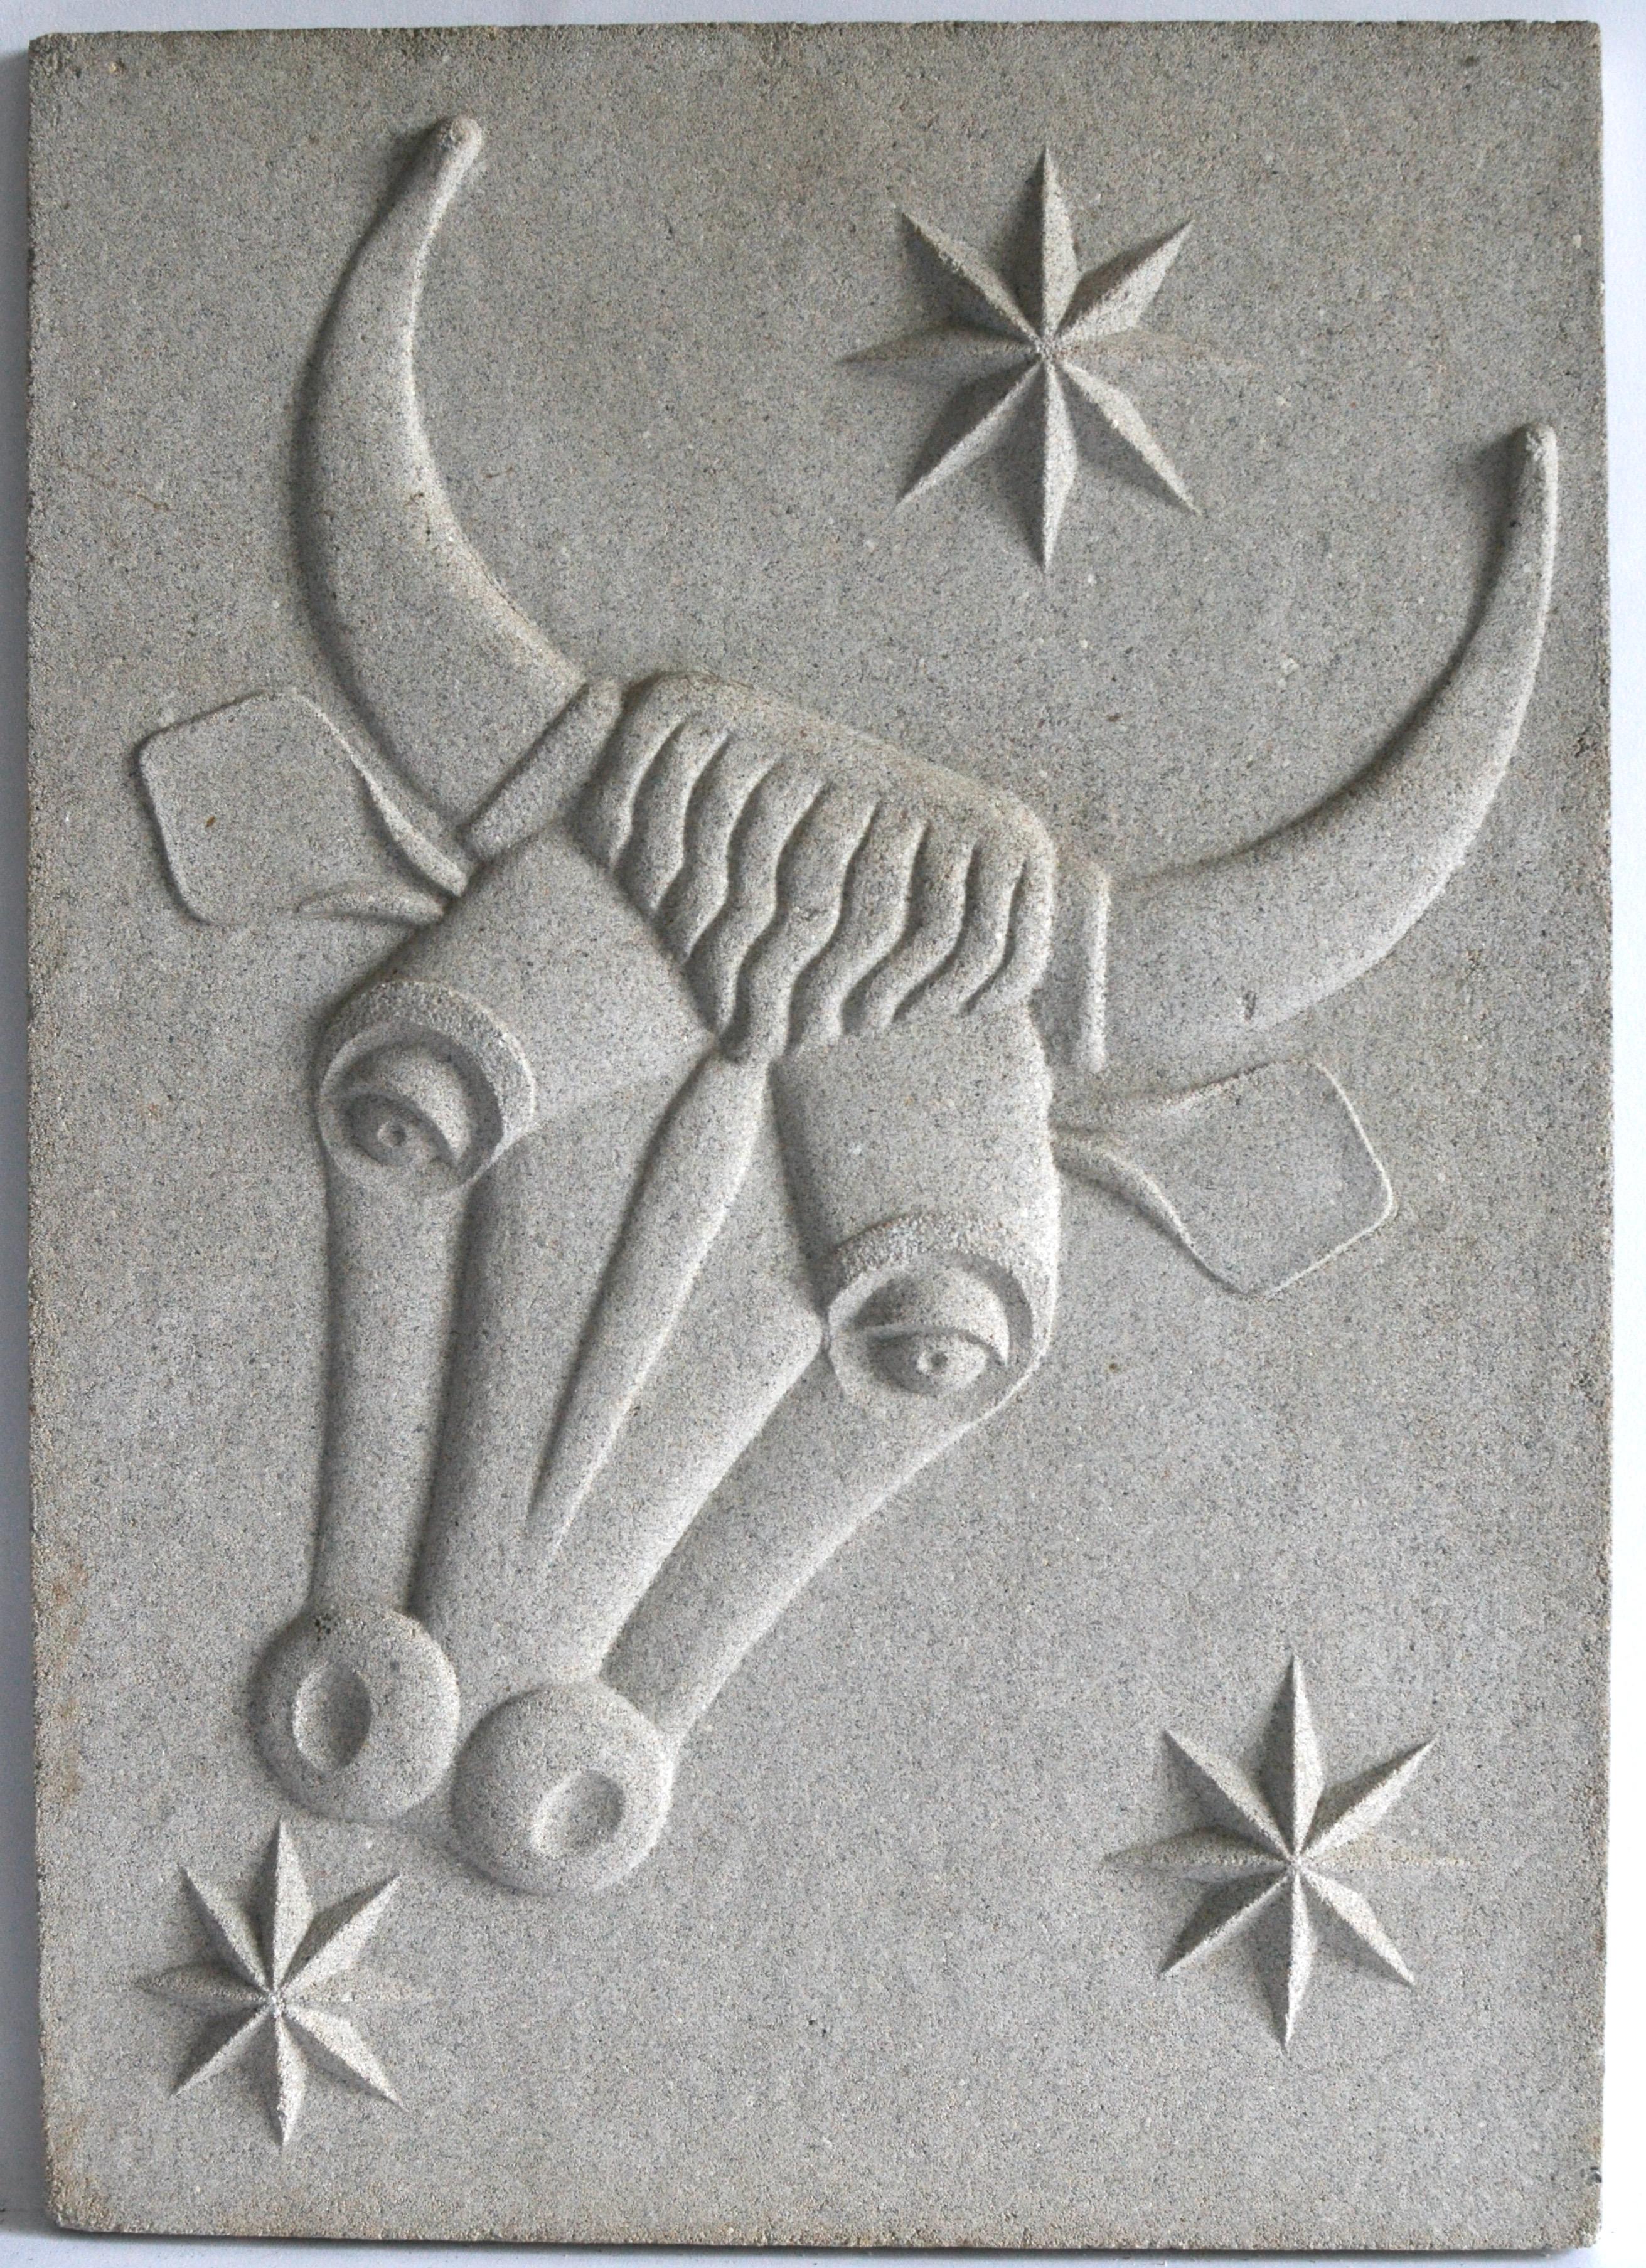 Cast Zodiac Artificial Stone Relief Sign of Libra, c. 1940